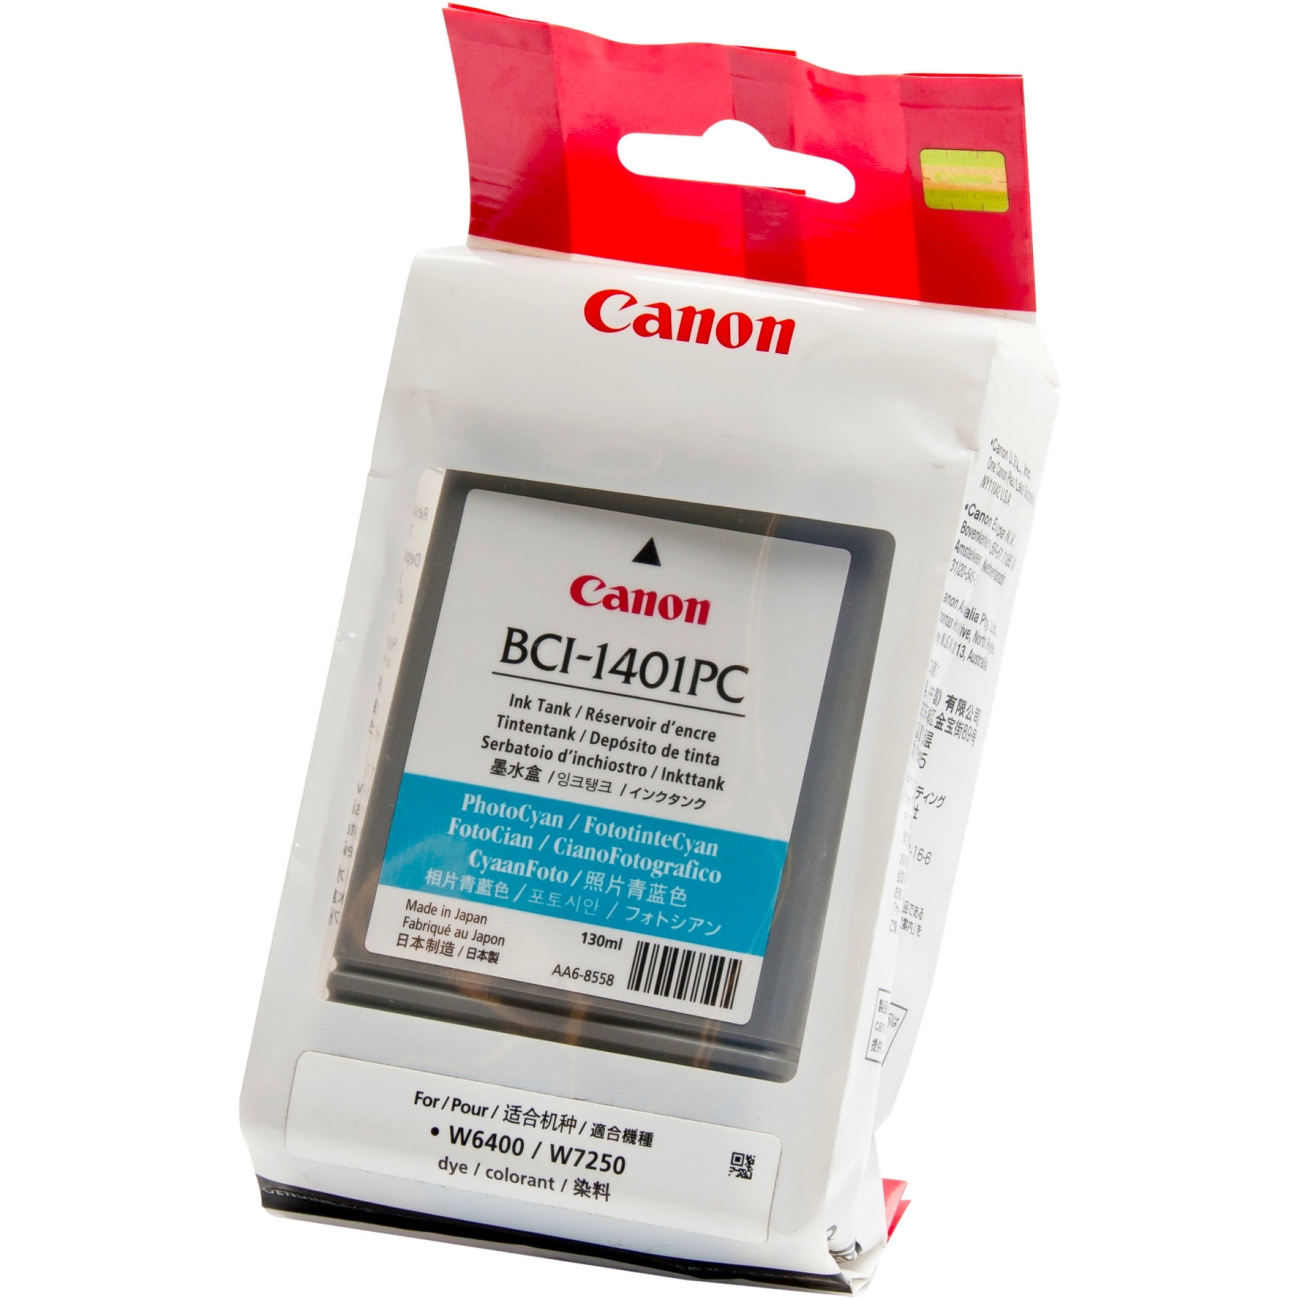 CANON Inkt Cartridge BCI-1401 Cyaan 130ml 1st